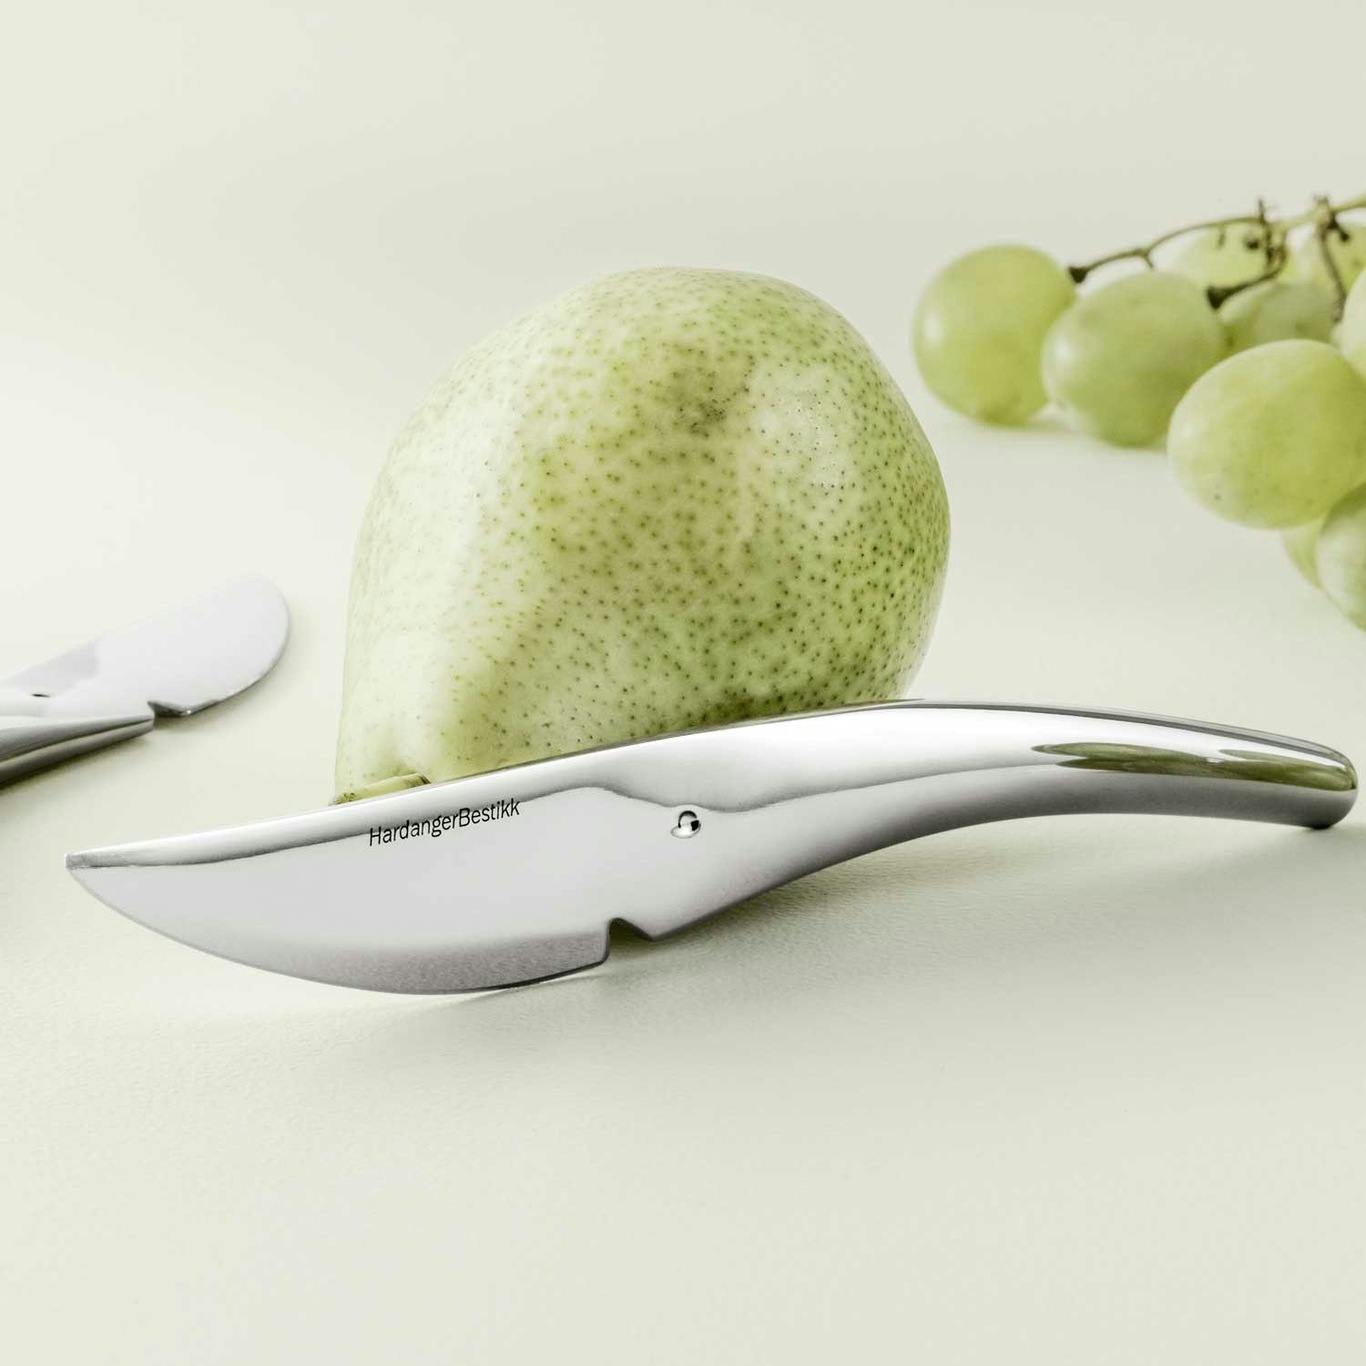 https://royaldesign.com/image/2/hardanger-fruit-knife-6-pack-3?w=800&quality=80